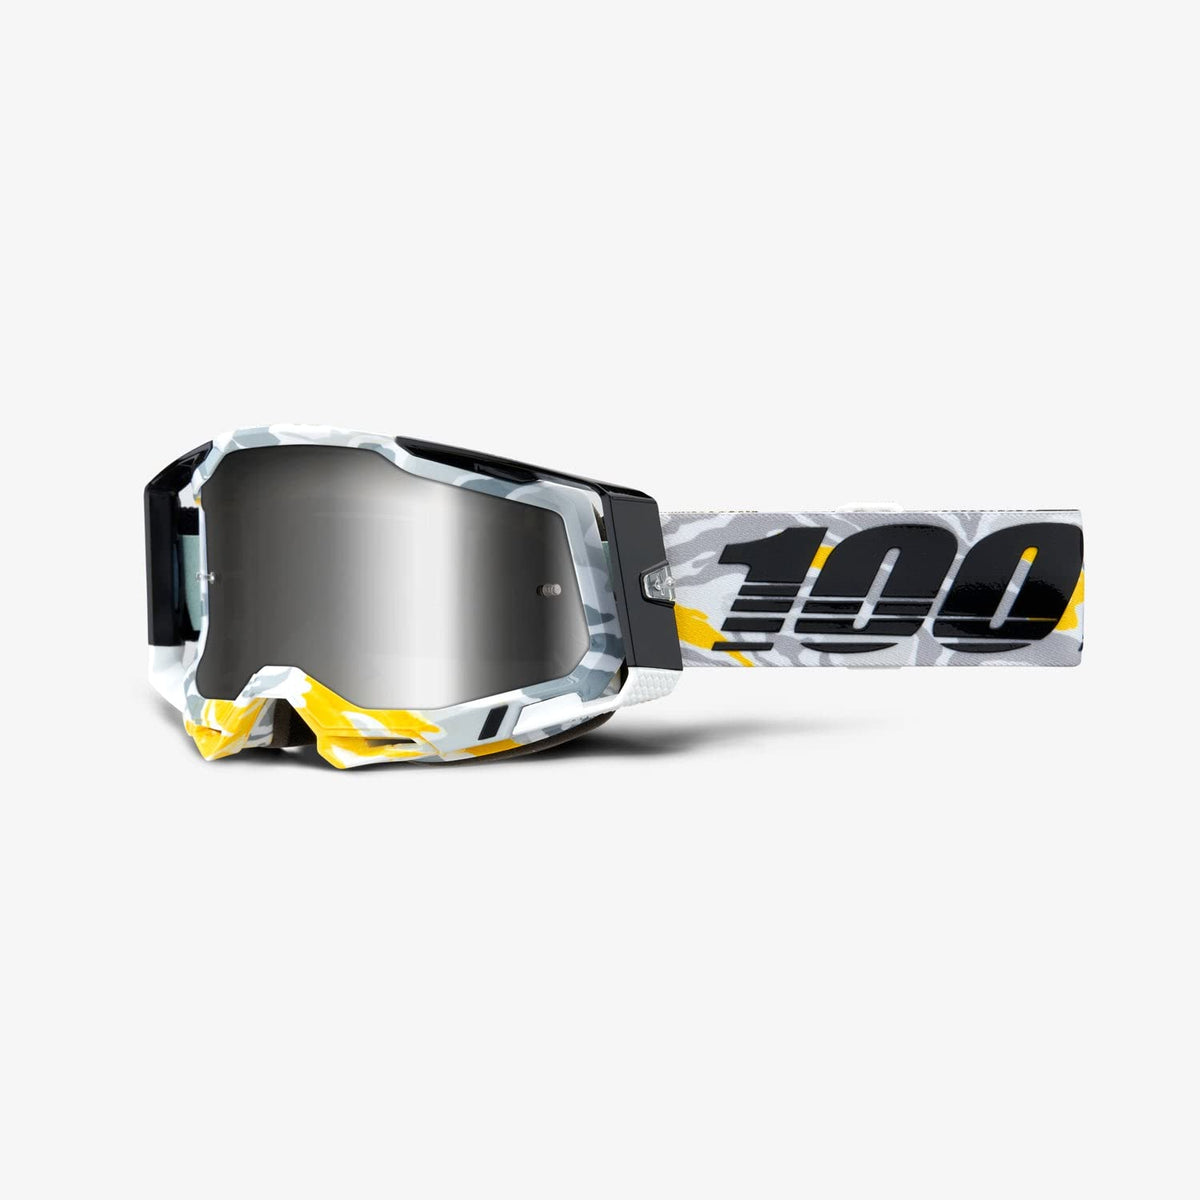 100% Racecraft 2 Goggles - Mountain Bike &amp; Motocross Goggles - Eyewear for Motocross &amp; Mountain Biking